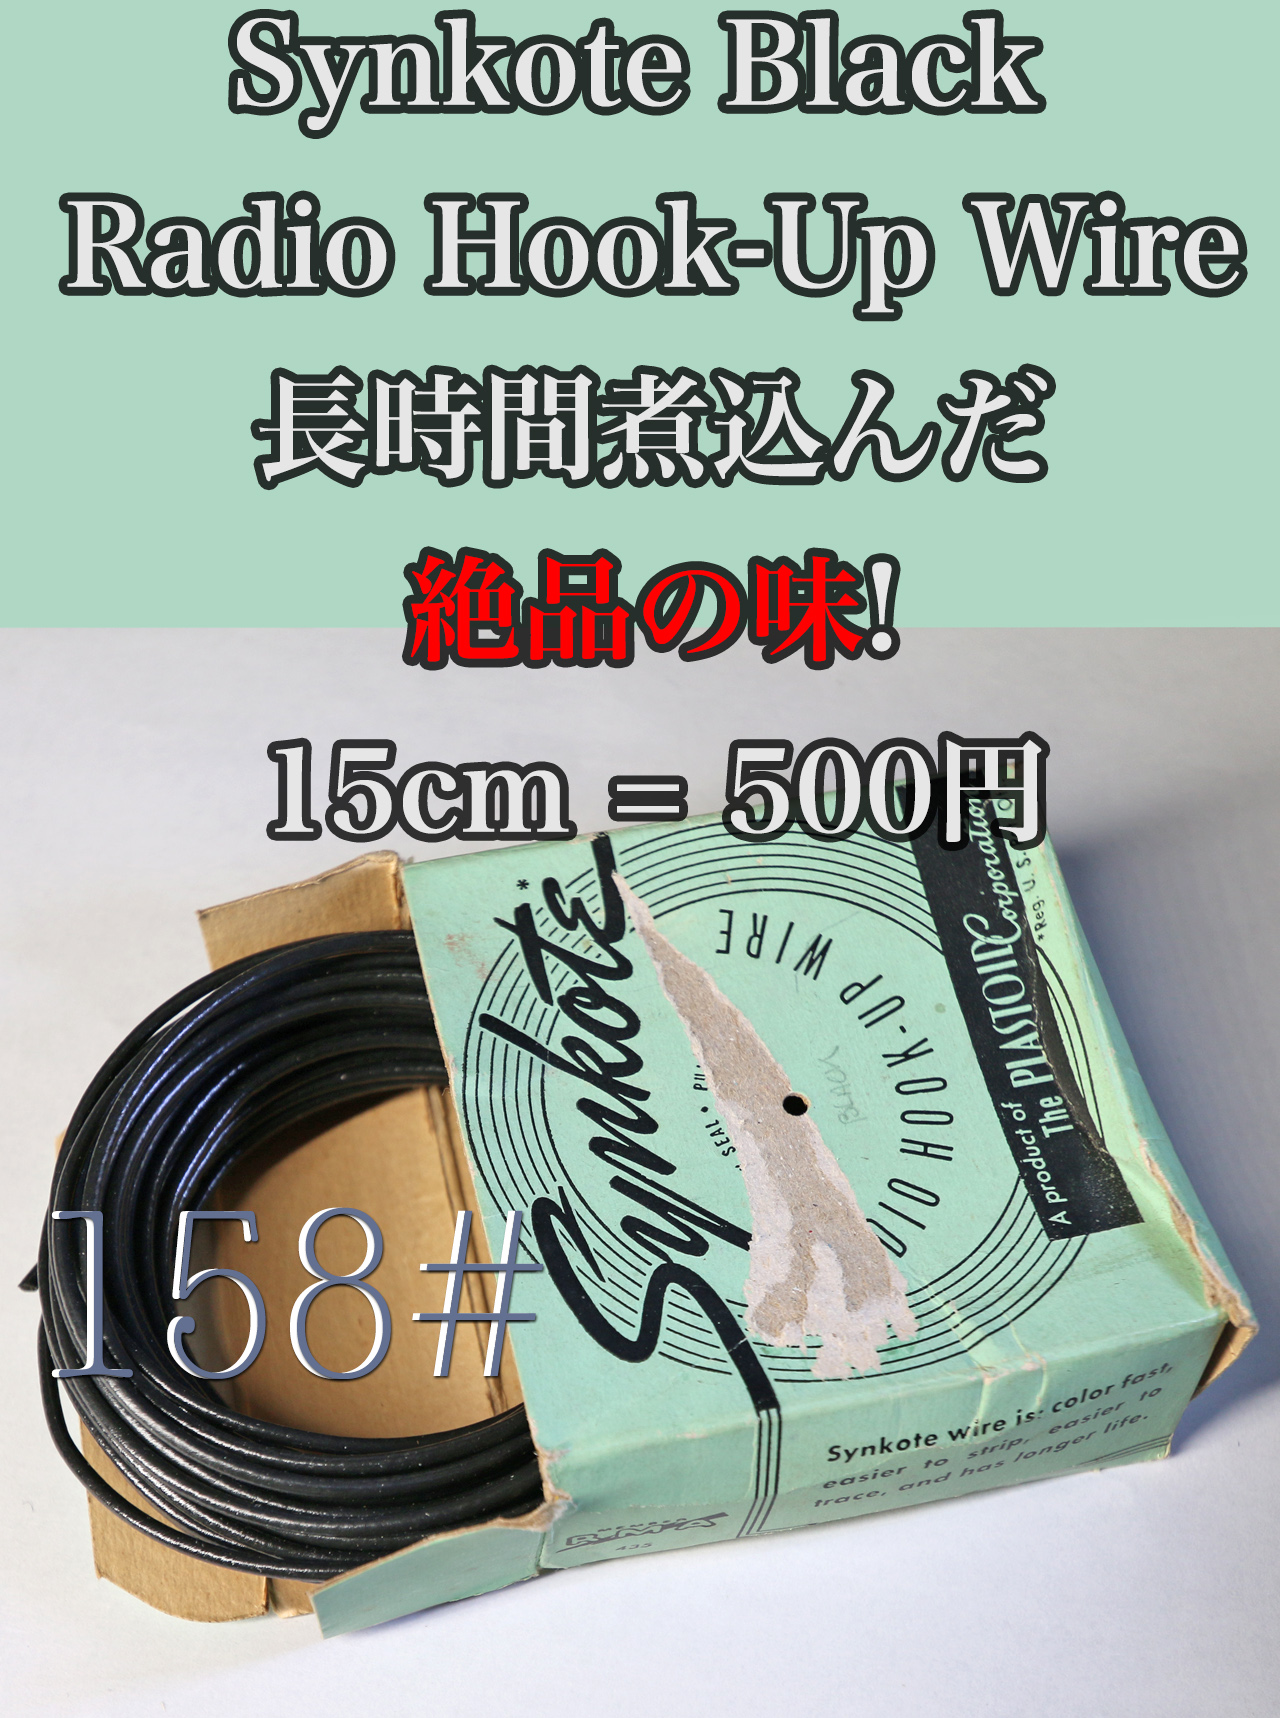 【158#】Synkote Black Radio Hook Up Wire 長時間煮込んだ絶品の味! 　15cm = 500円画像